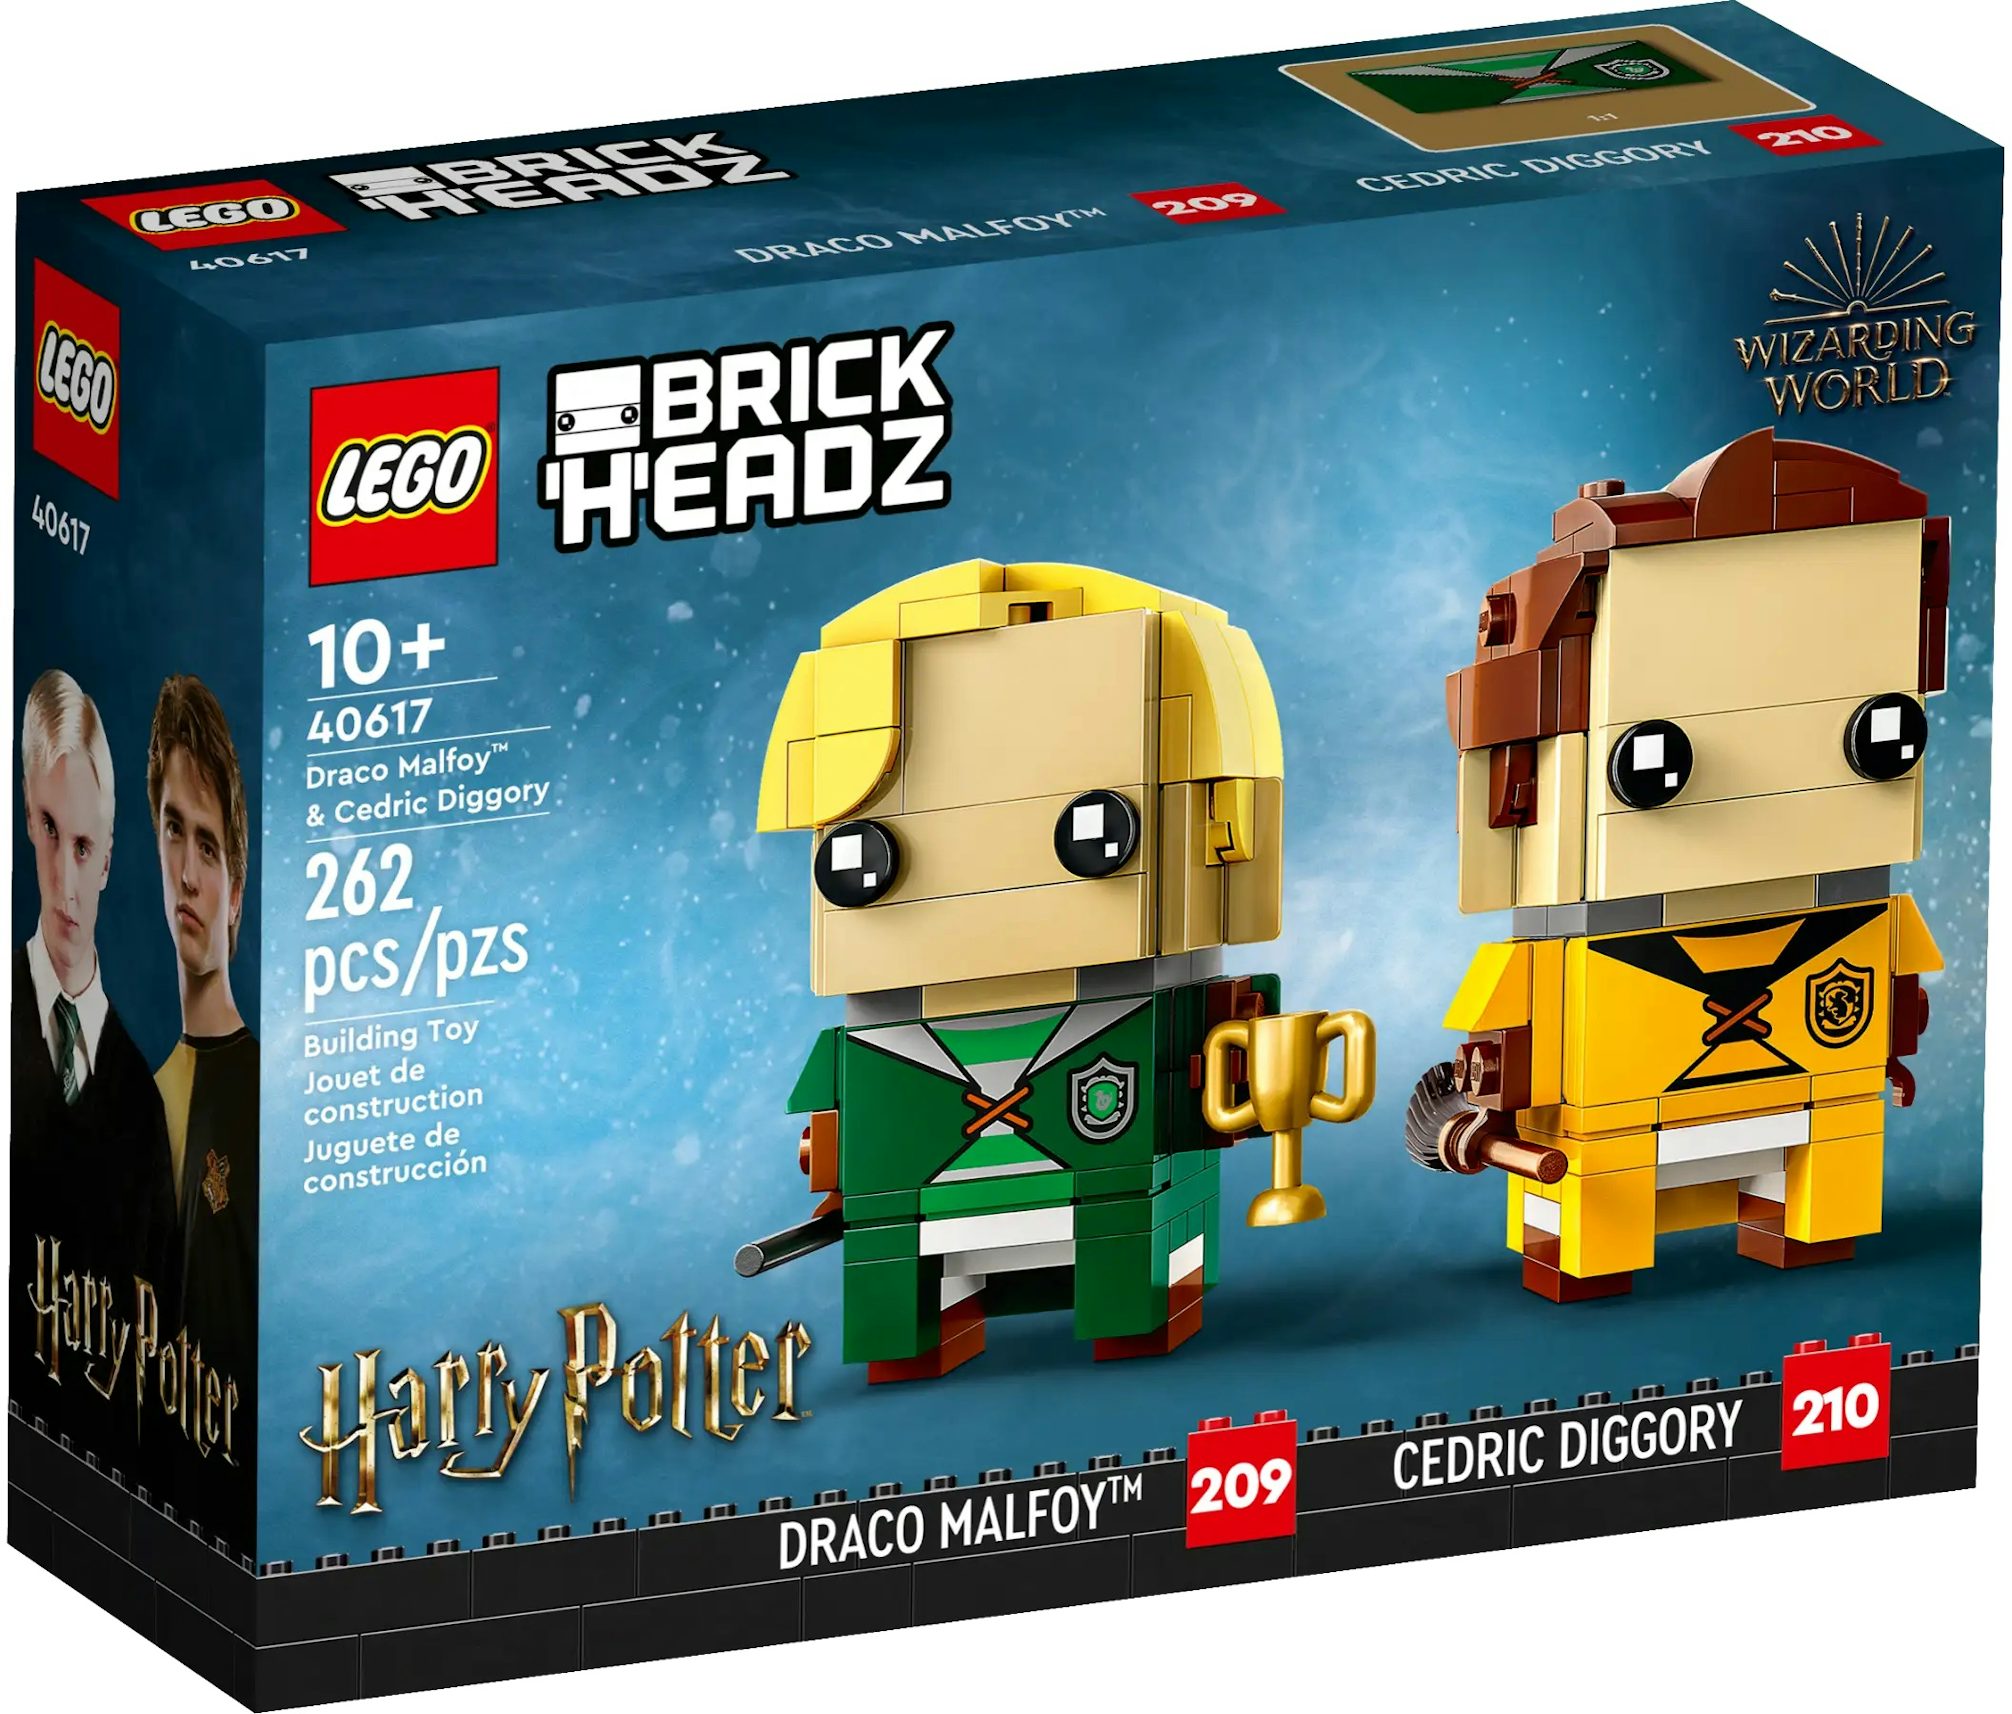 LEGO Brickheadz Harry Potter Draco Malfoy & Cedric Diggory Set 40617 - US